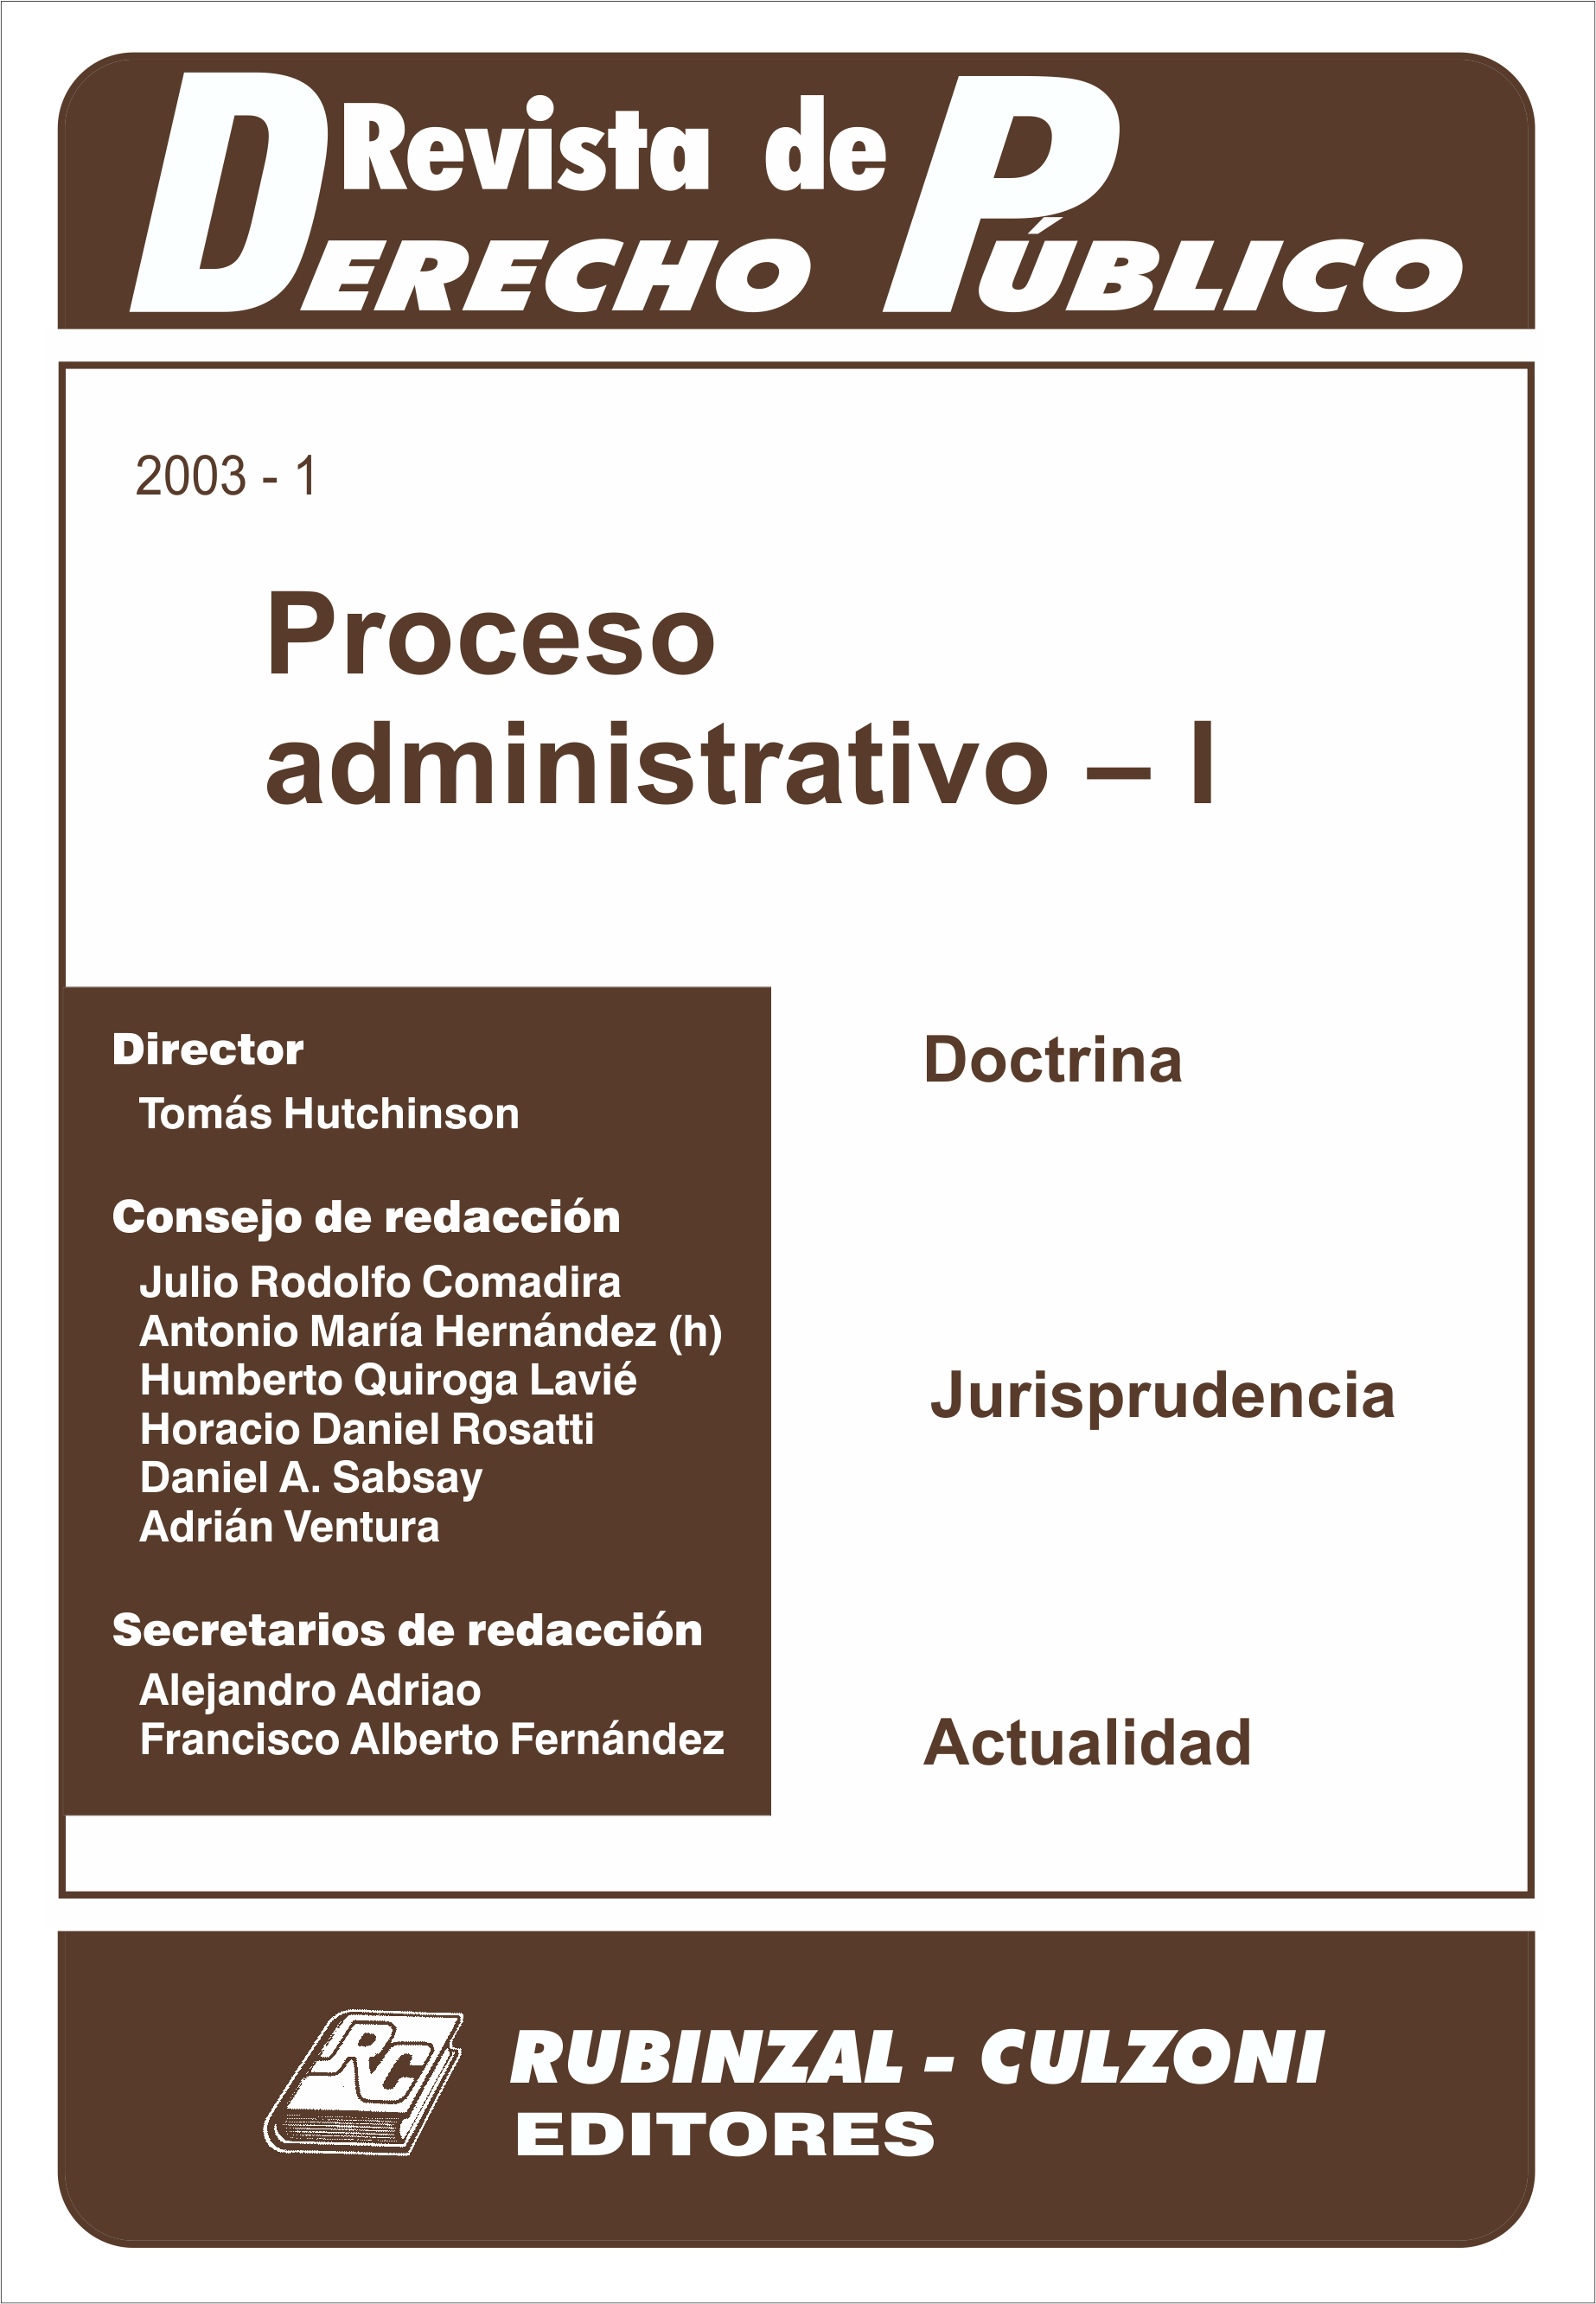 Proceso administrativo - I. [2003-1]